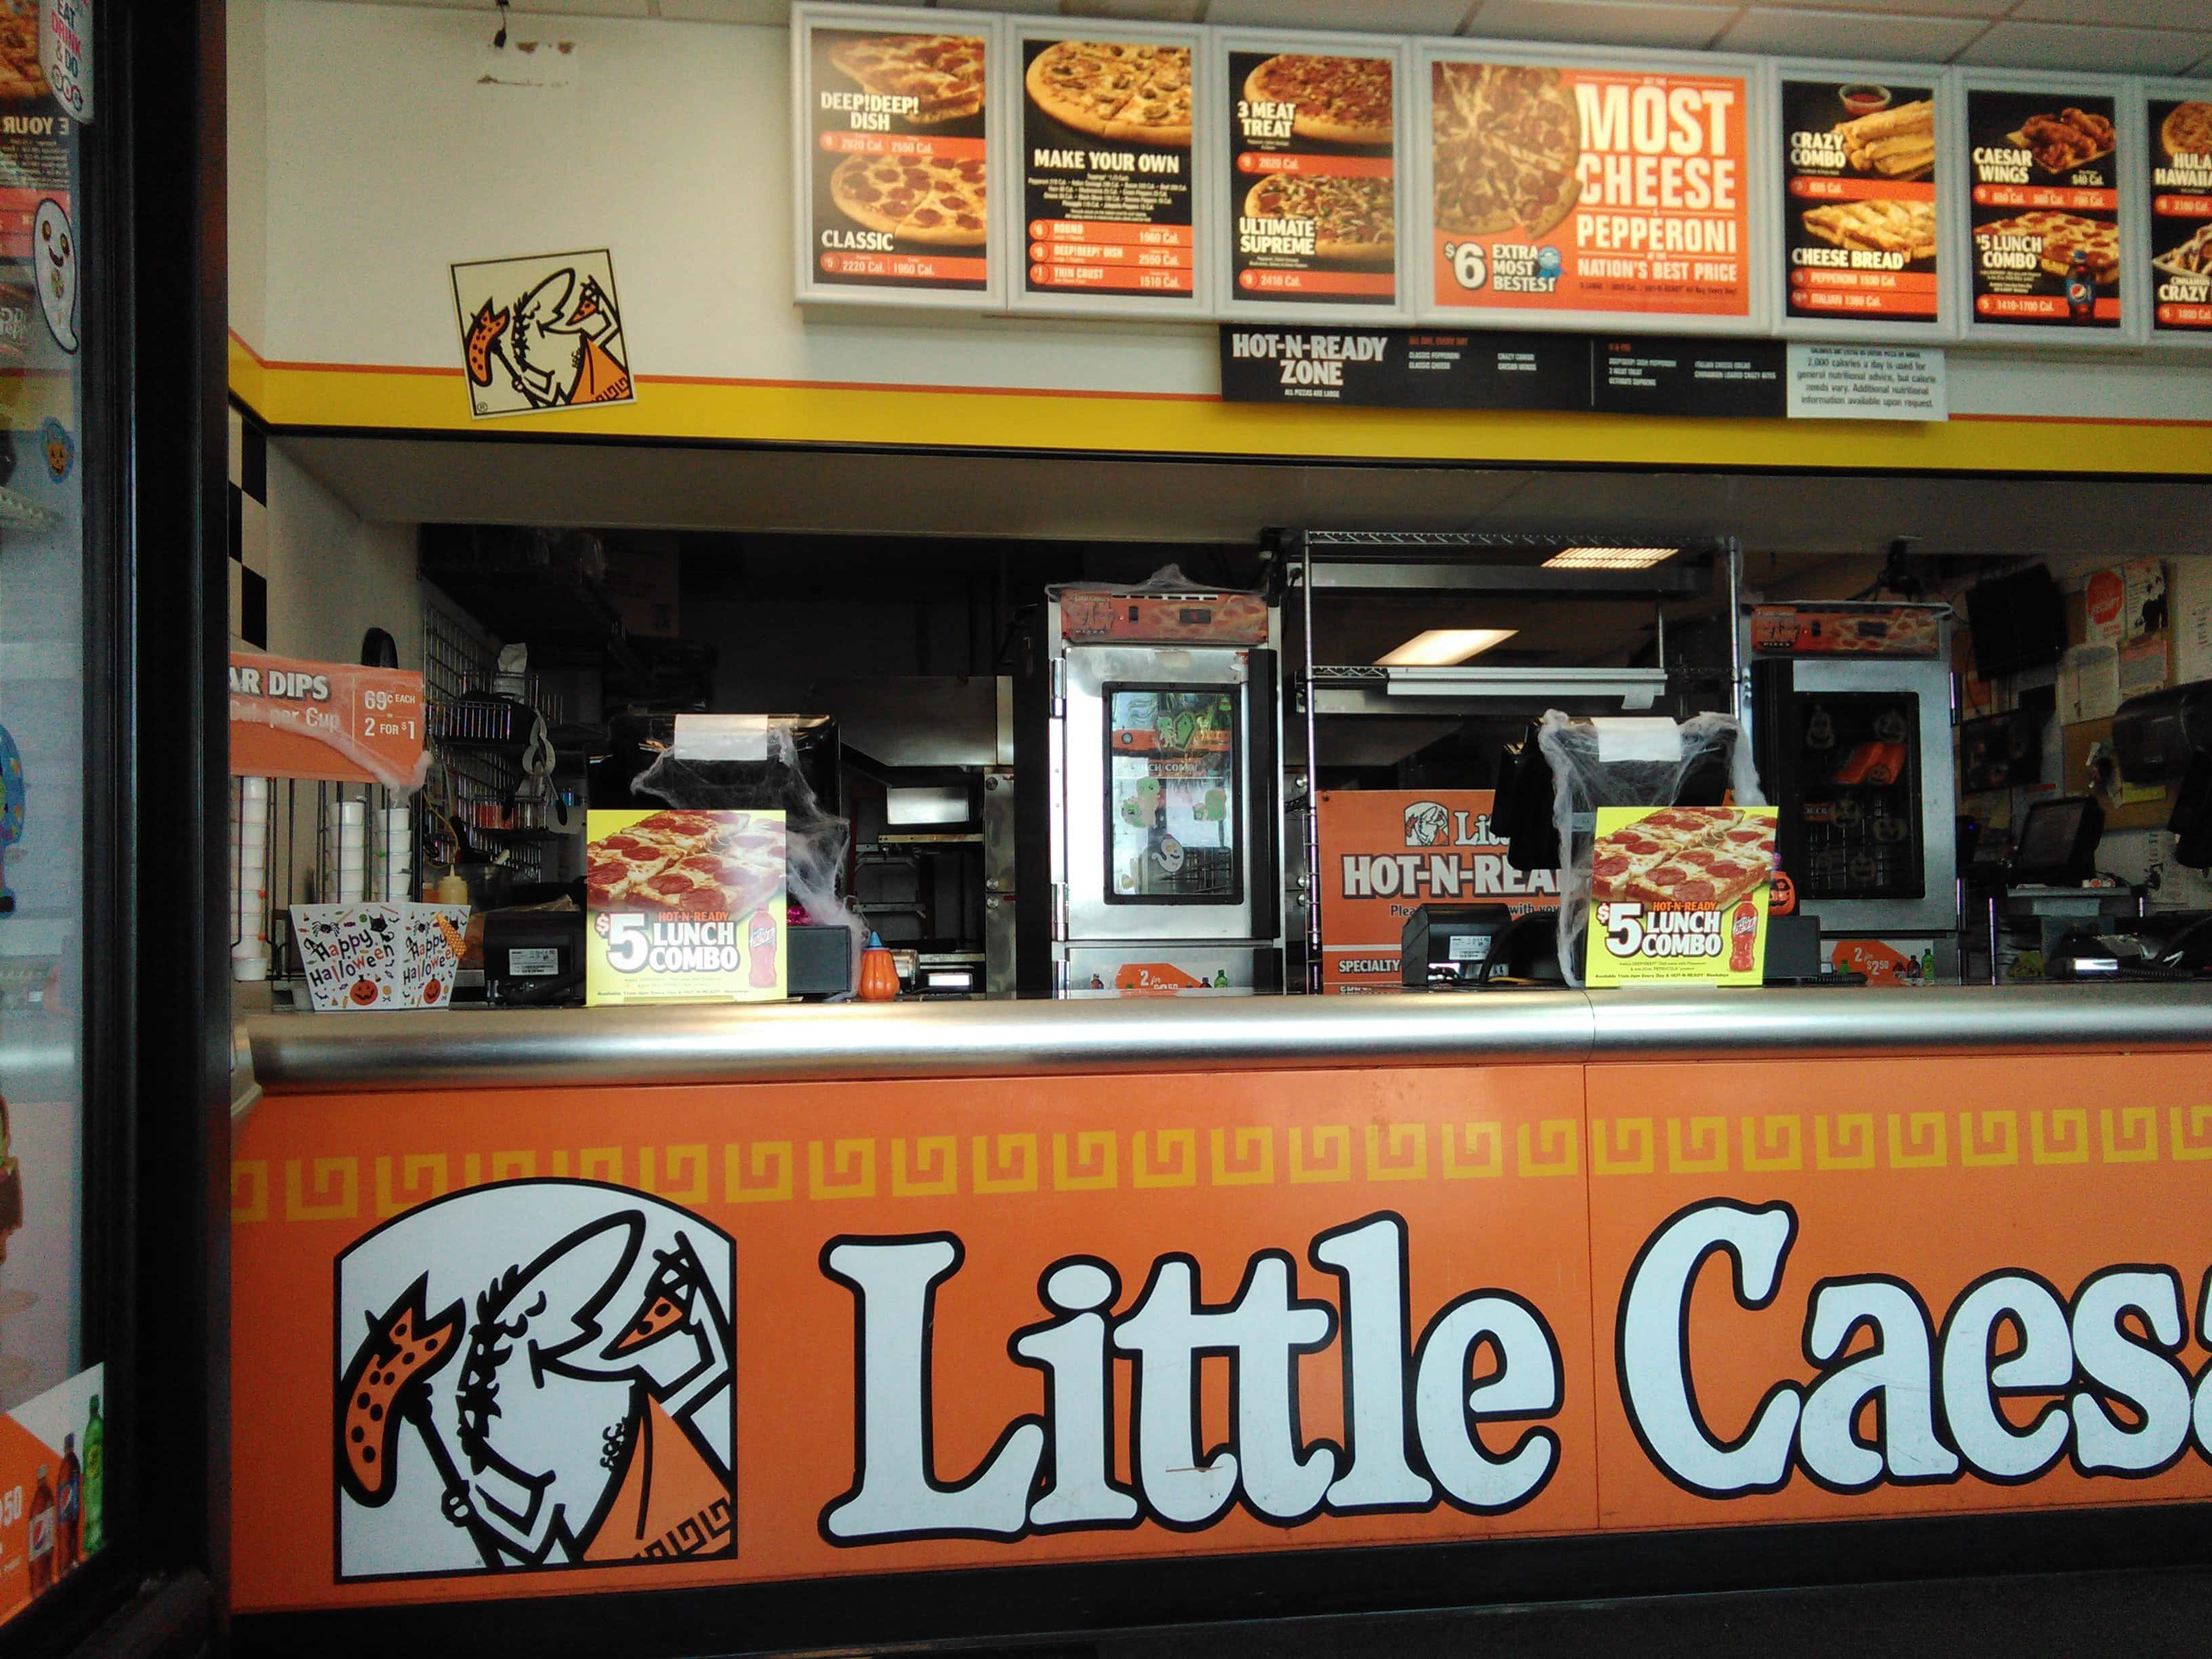 Little Caesars Pizza - Auburndale (FL 33823), US, nearest pizza delivery to me